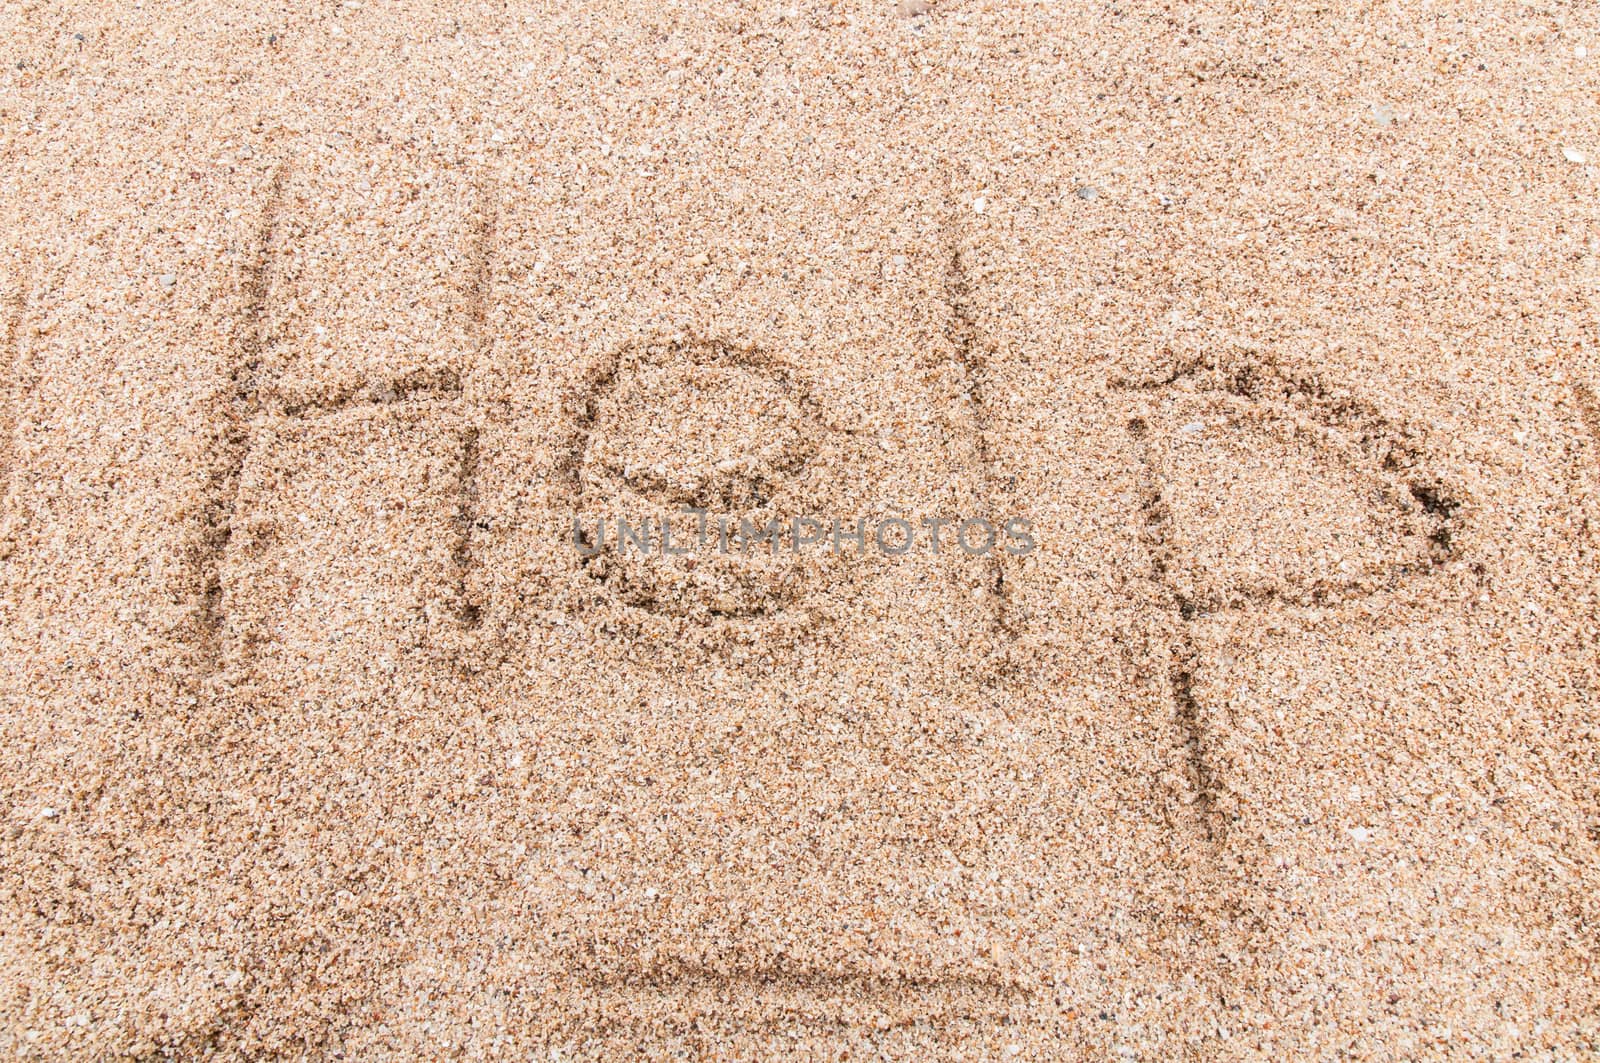 Help! write sand by Sorapop